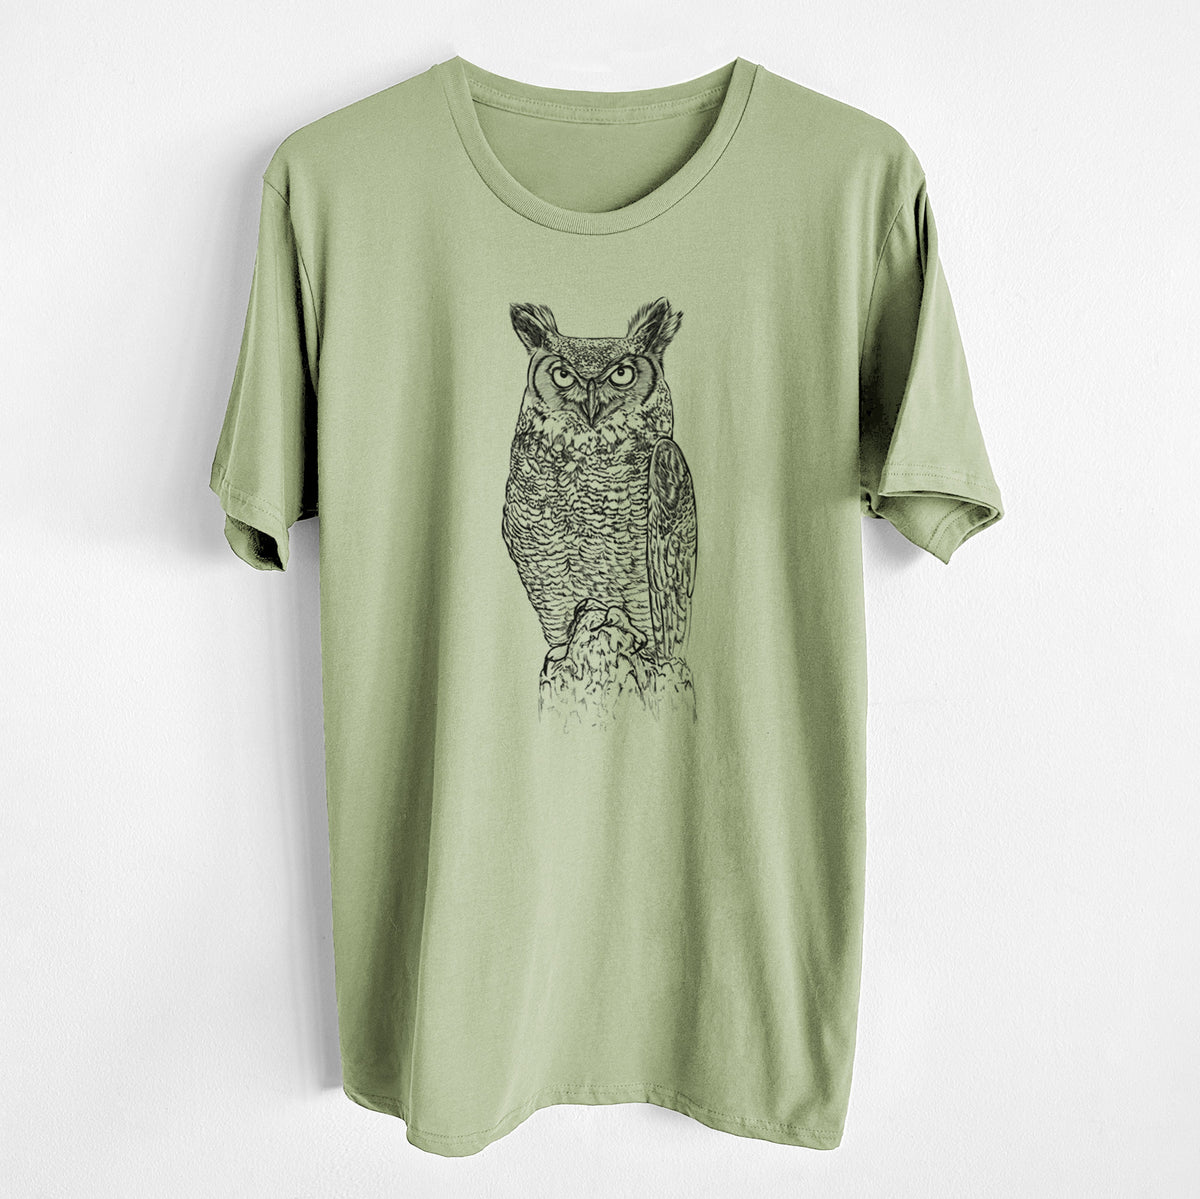 Bubo virginianus - Great Horned Owl - Unisex Crewneck - Made in USA - 100% Organic Cotton